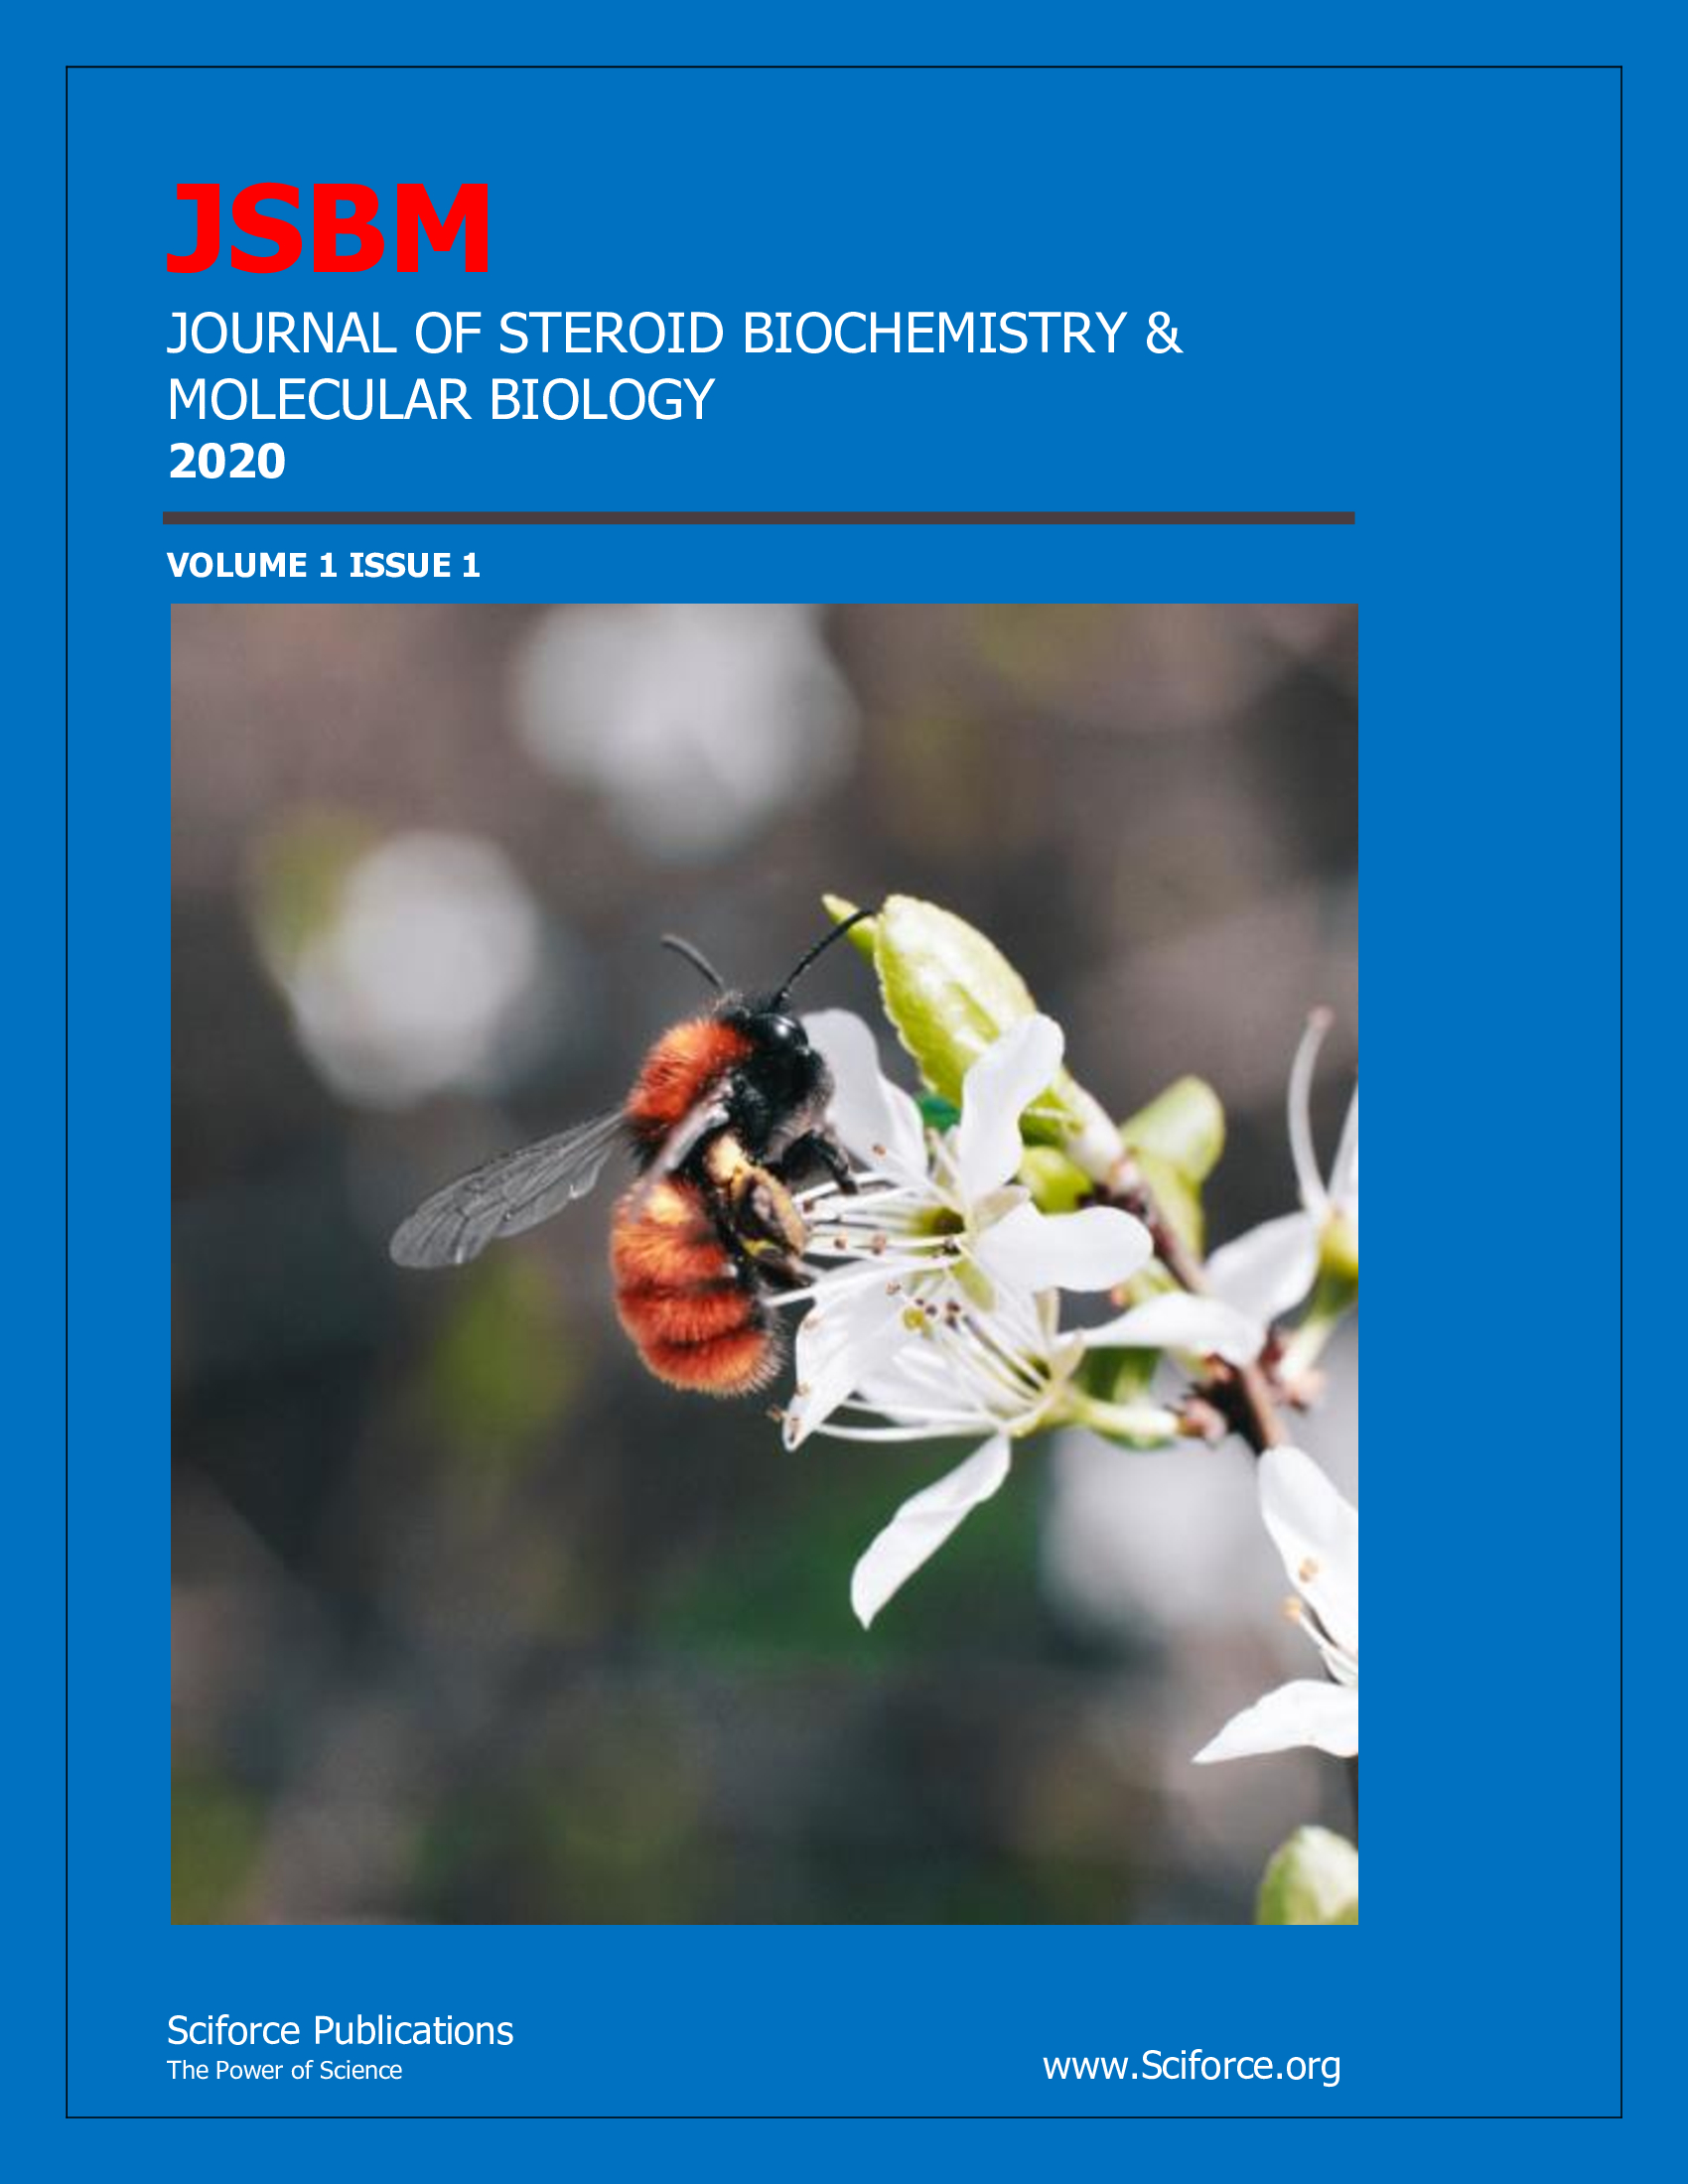 International Journal of Steroid Biochemistry and Molecular Biology